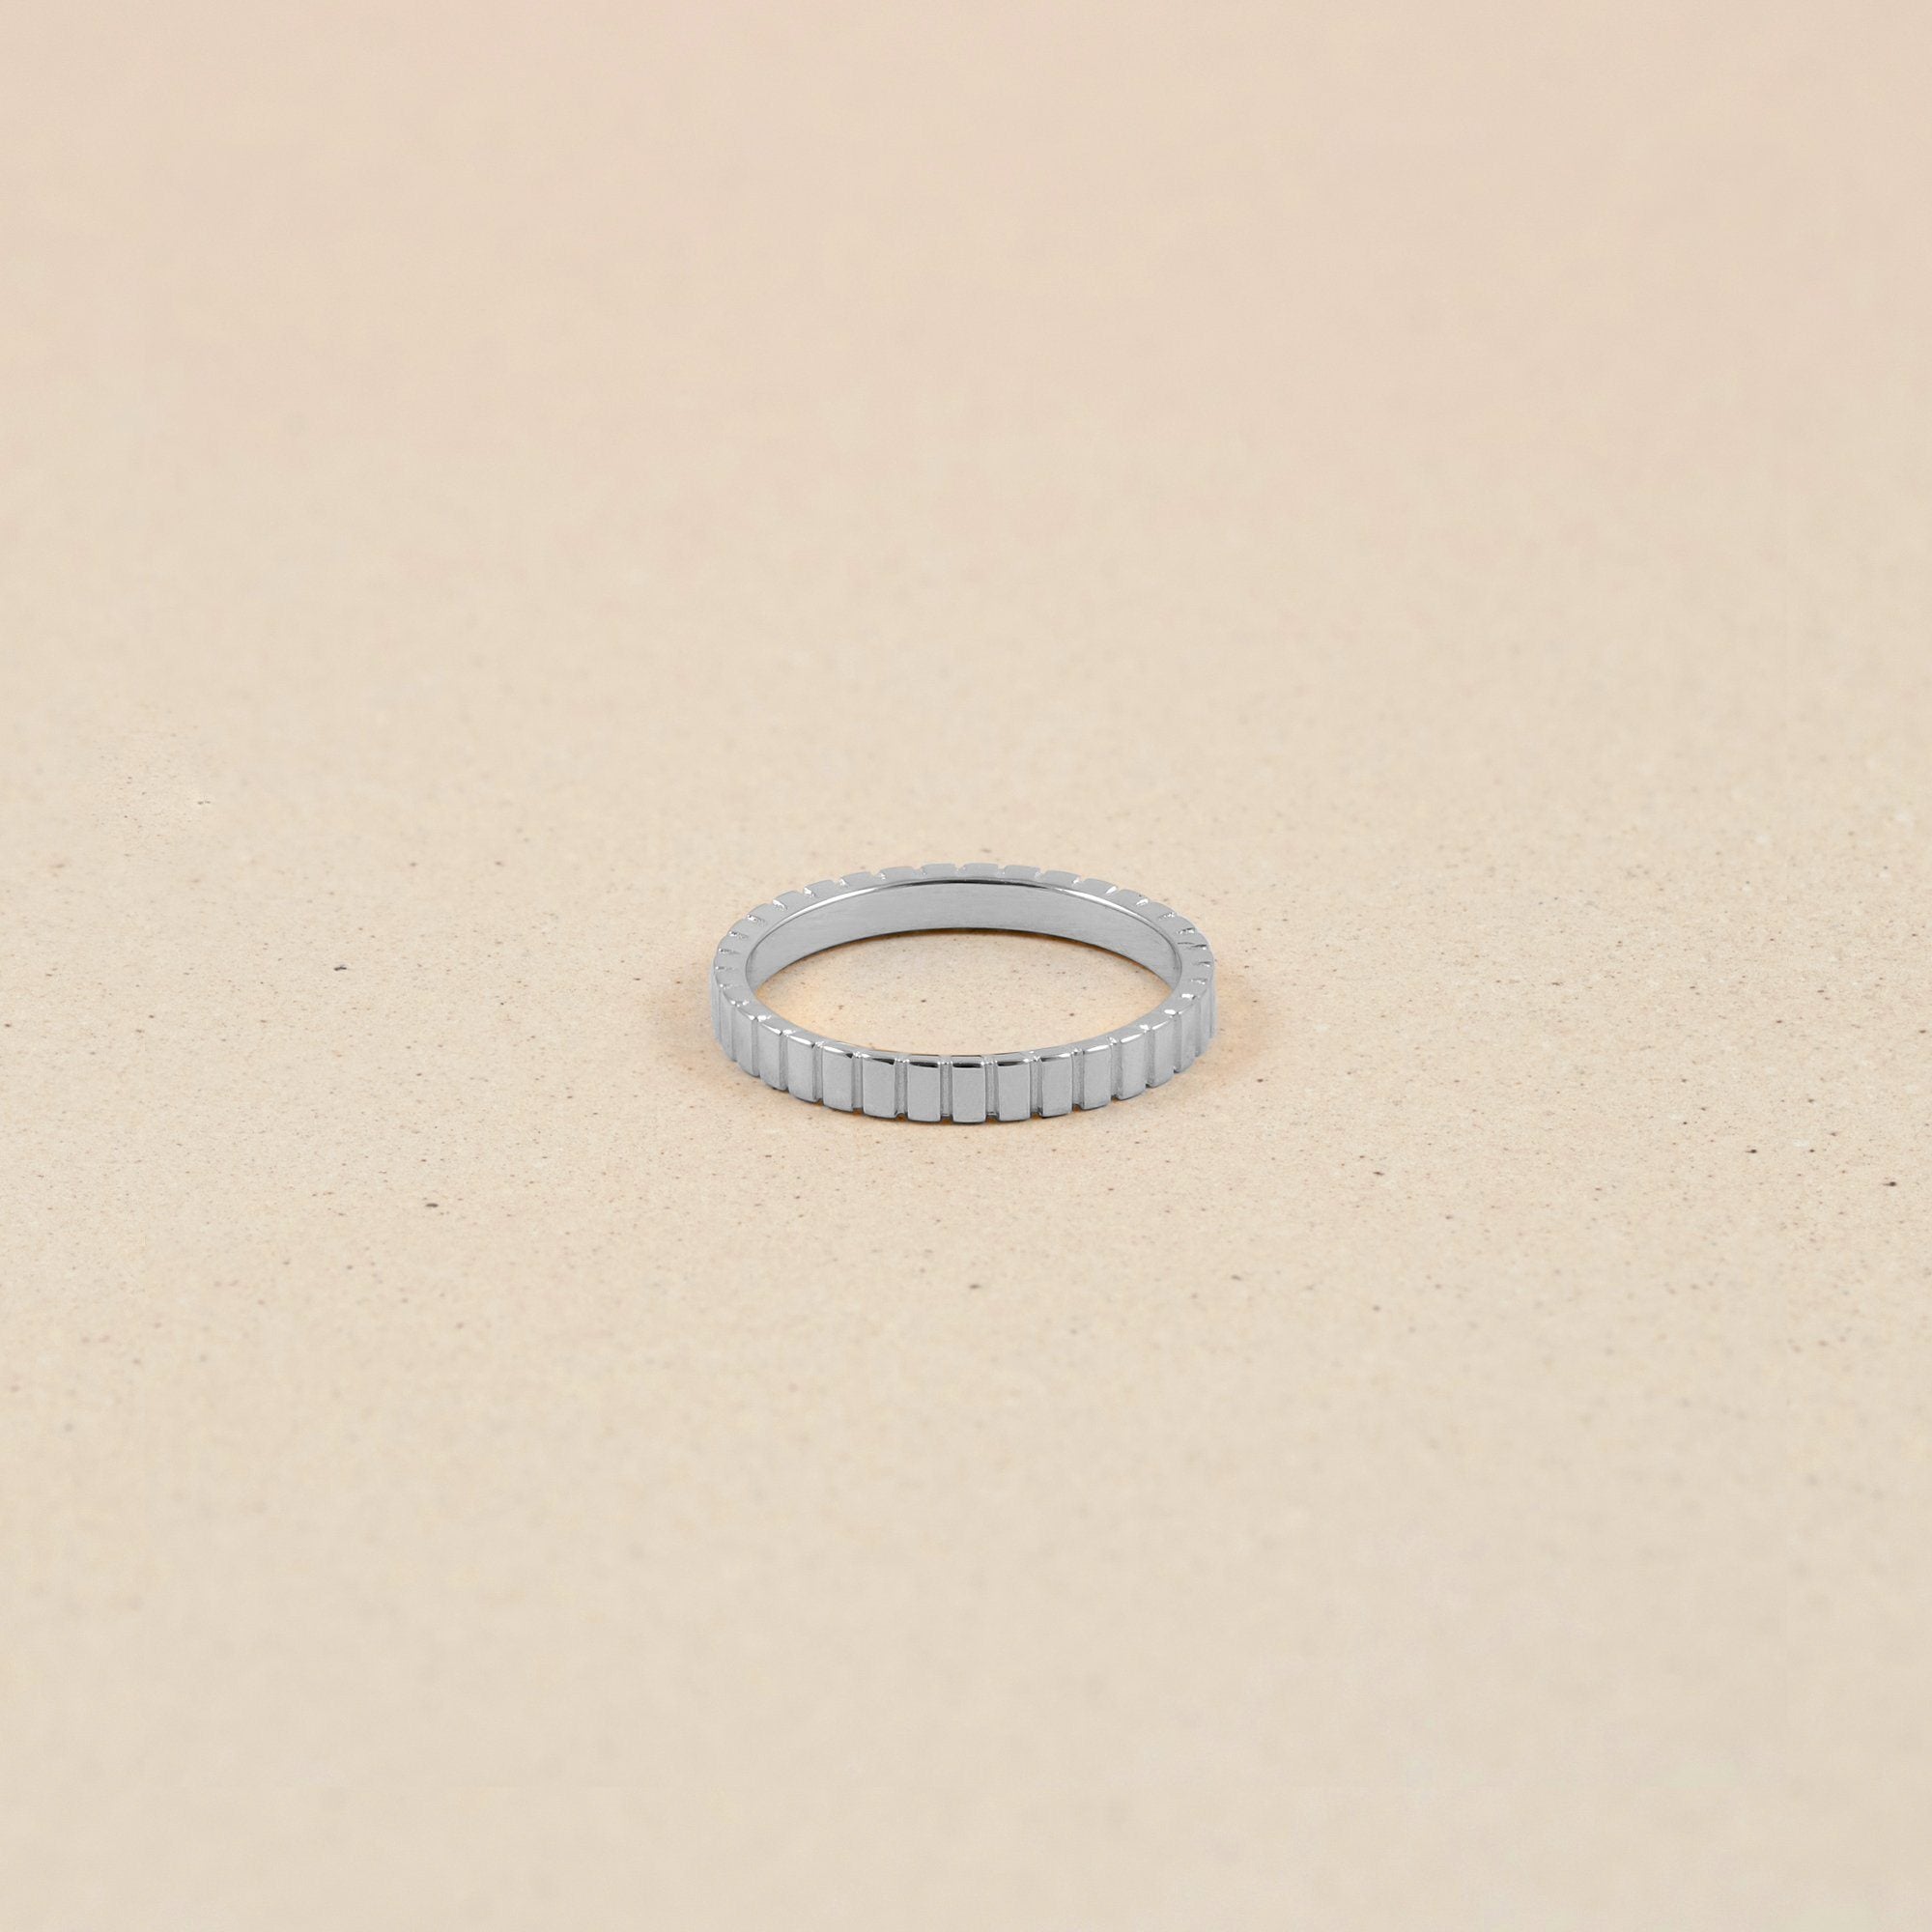 Ridged Ring Jewelry stilnest 925 Silver XS - 49 (15.6mm) 